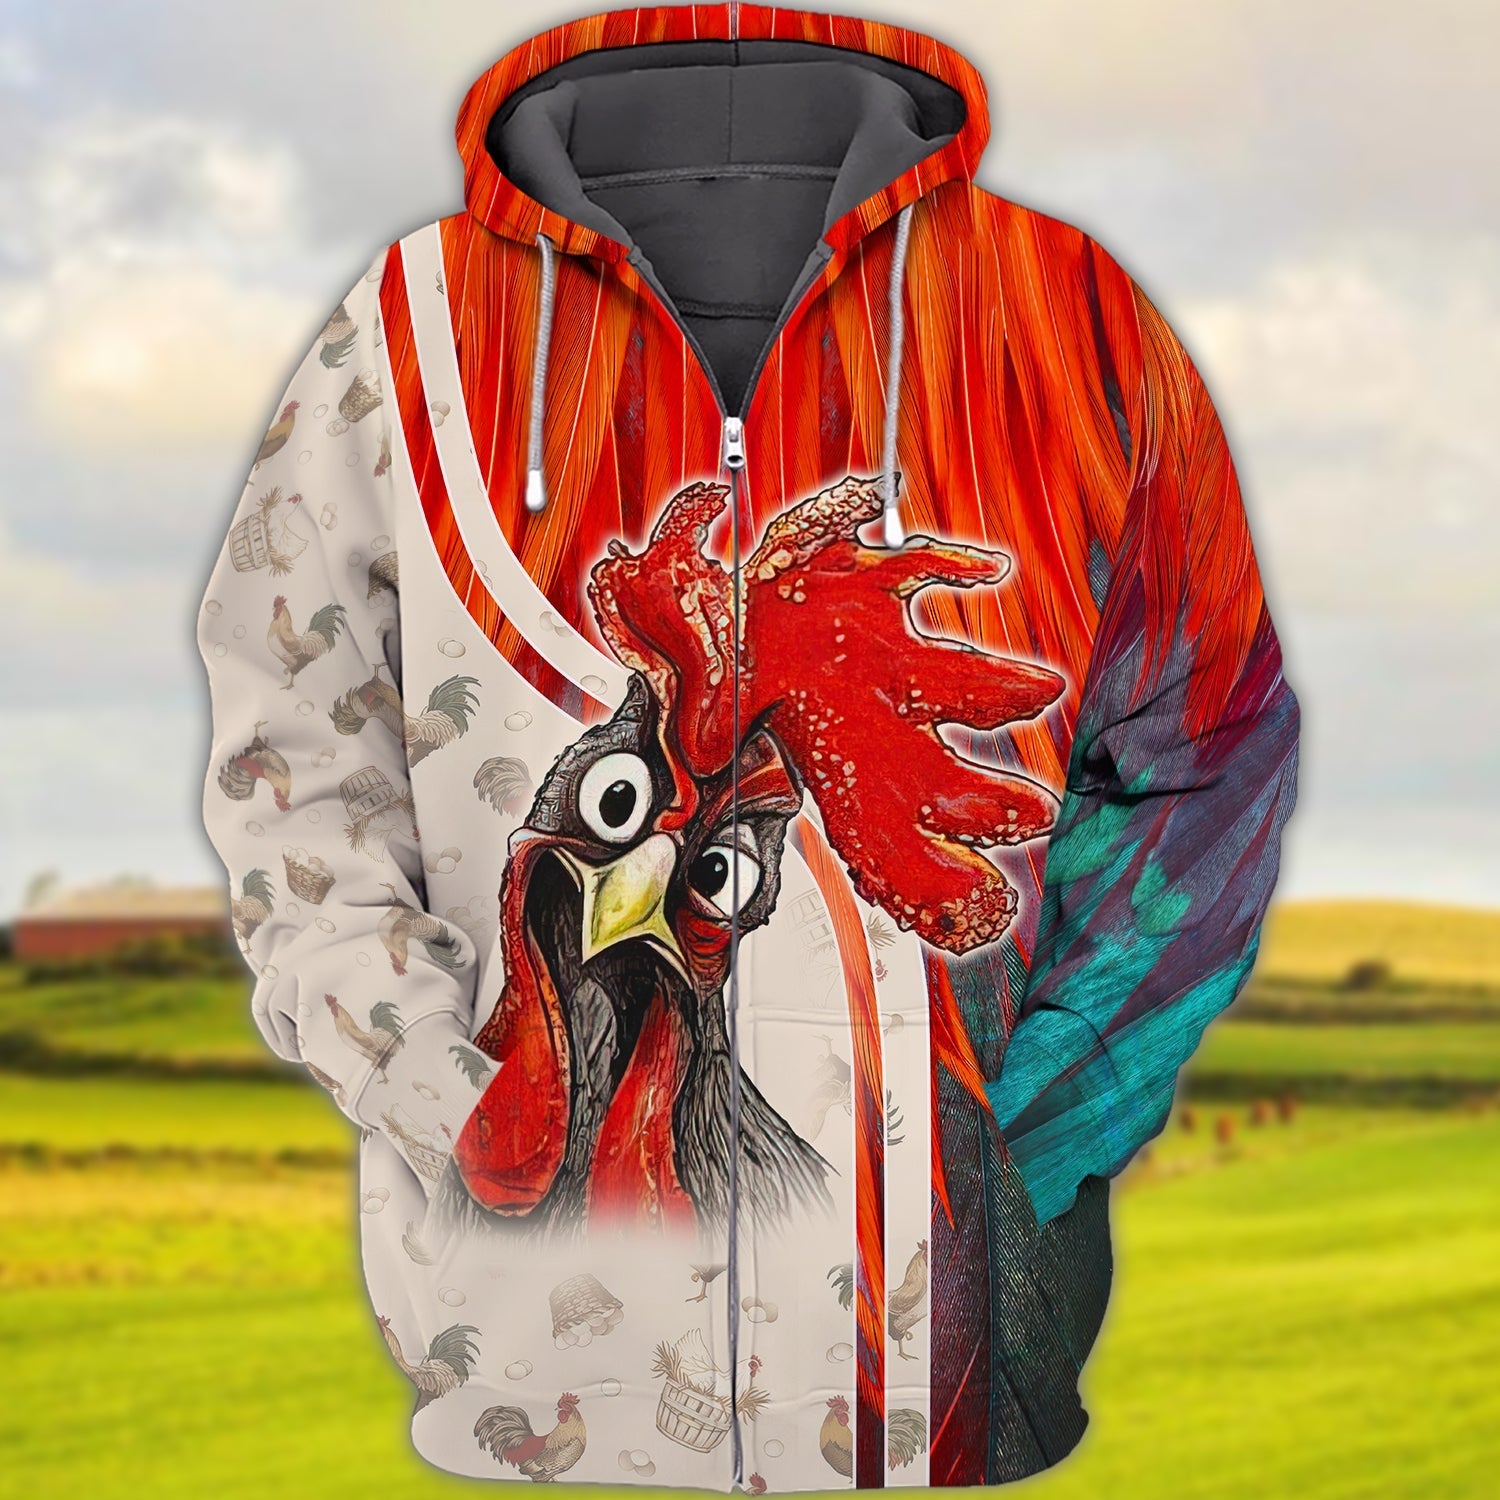 3D Farmer Shirt For Chicken Lover Rooster Full Print Shirts Farmer Gifts